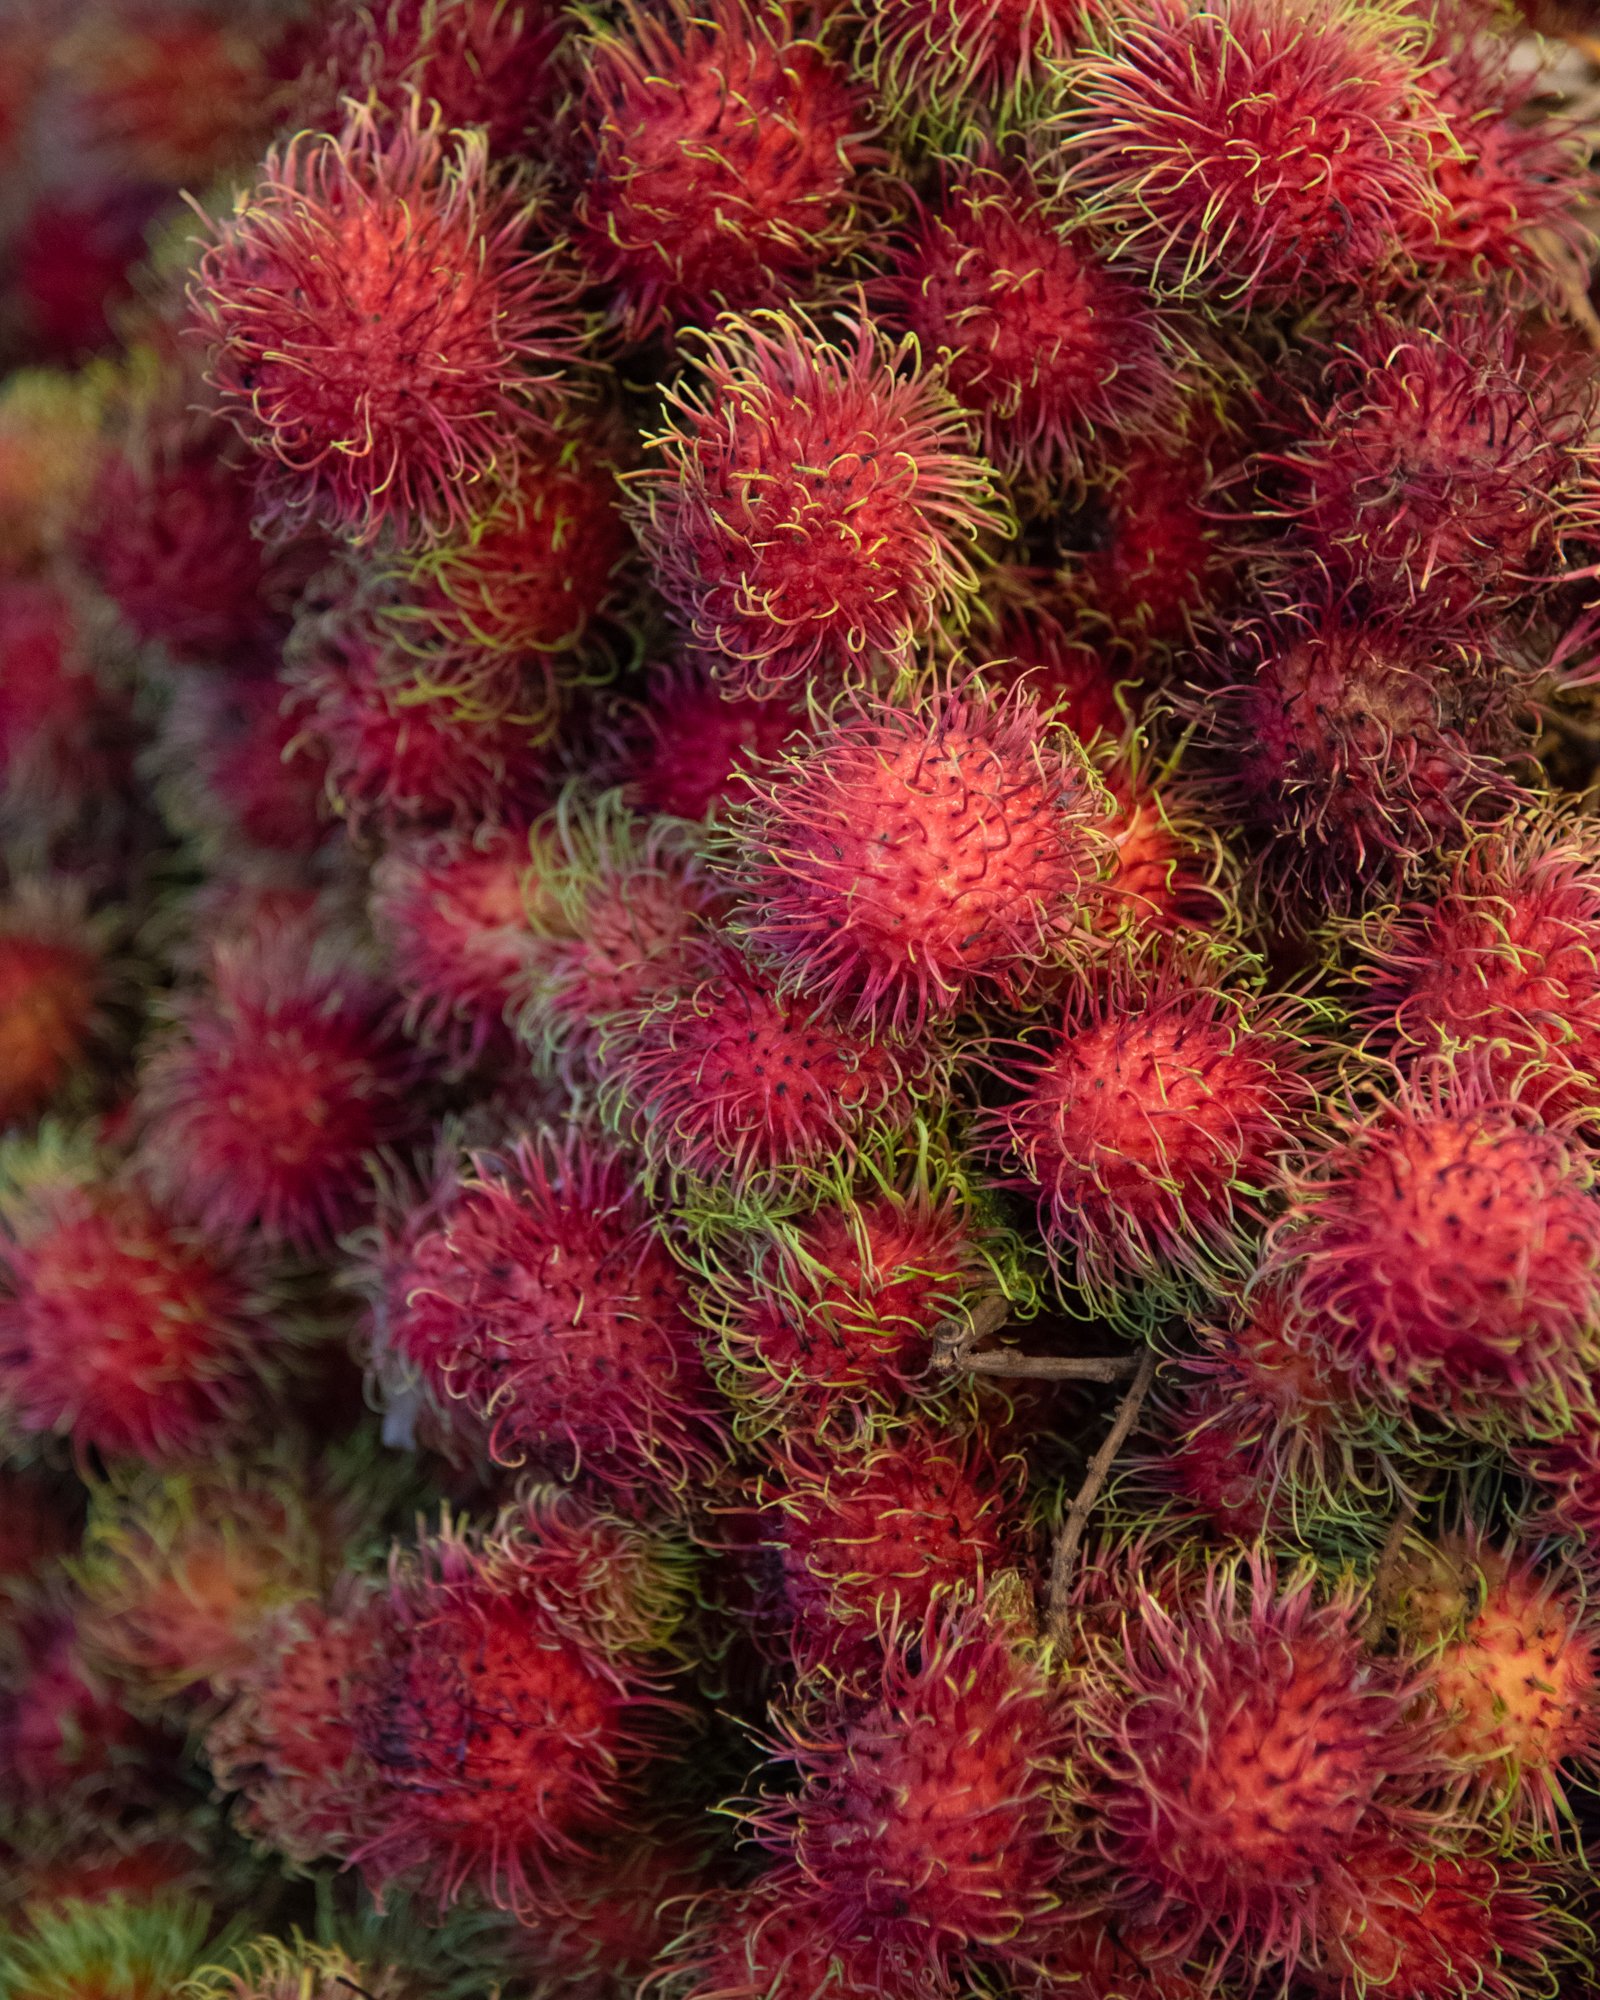 A close up photo of rambutan fruit